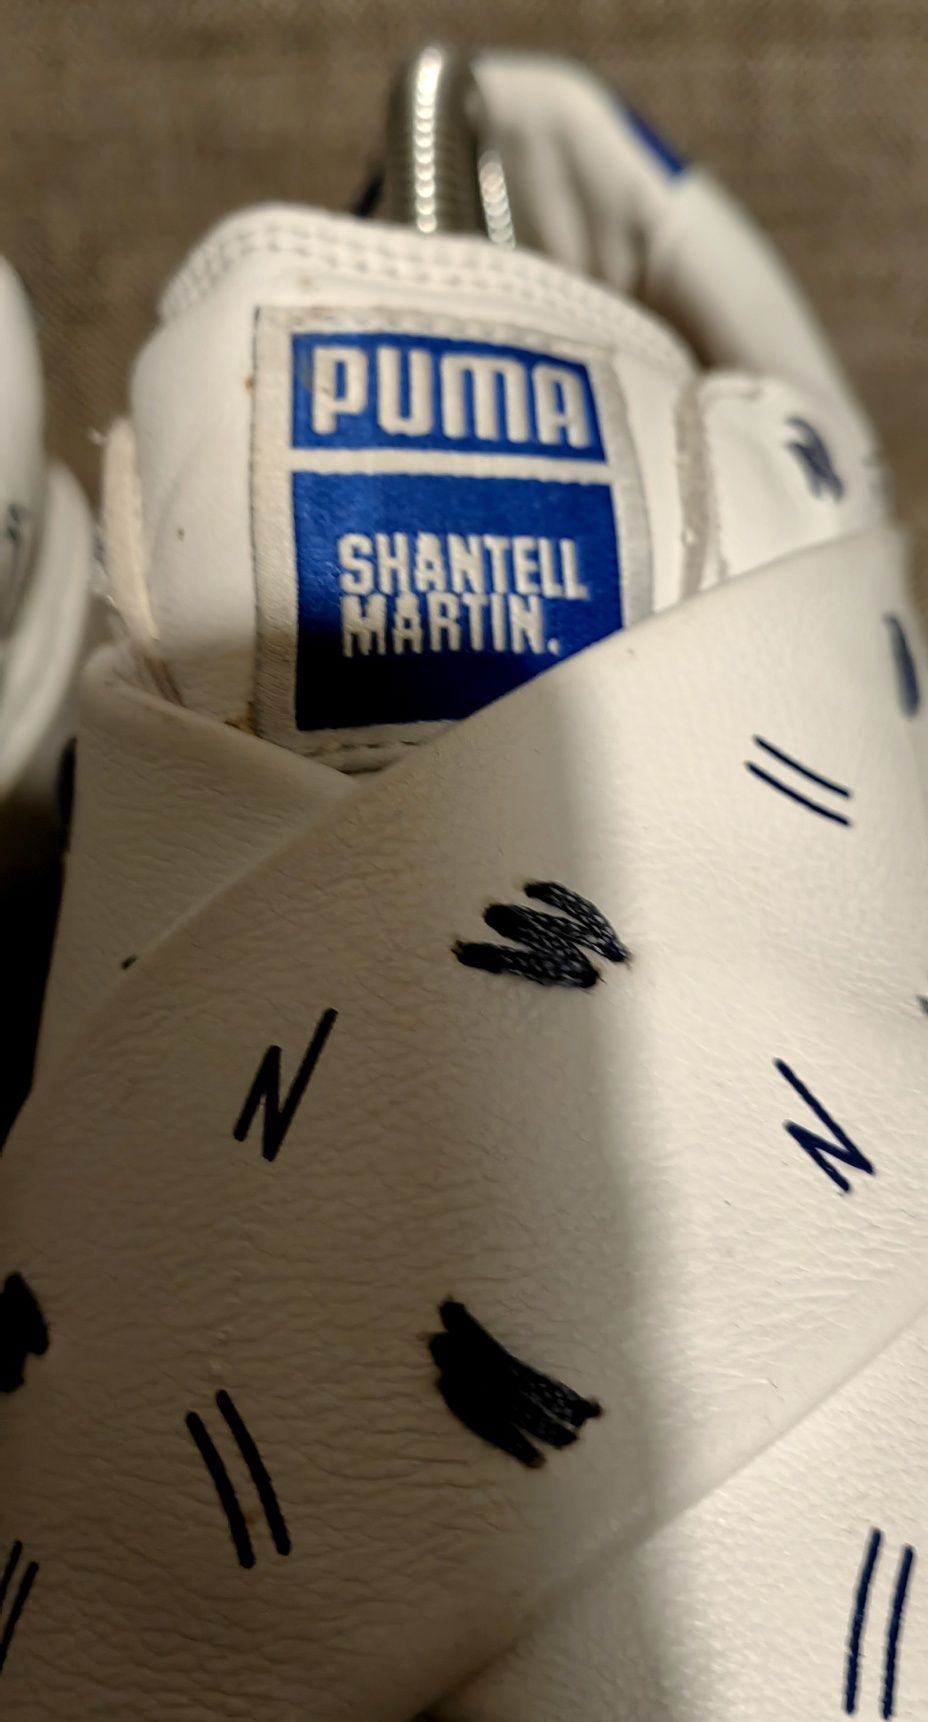 Adidasi unisex Puma Shantell Martin 40.5